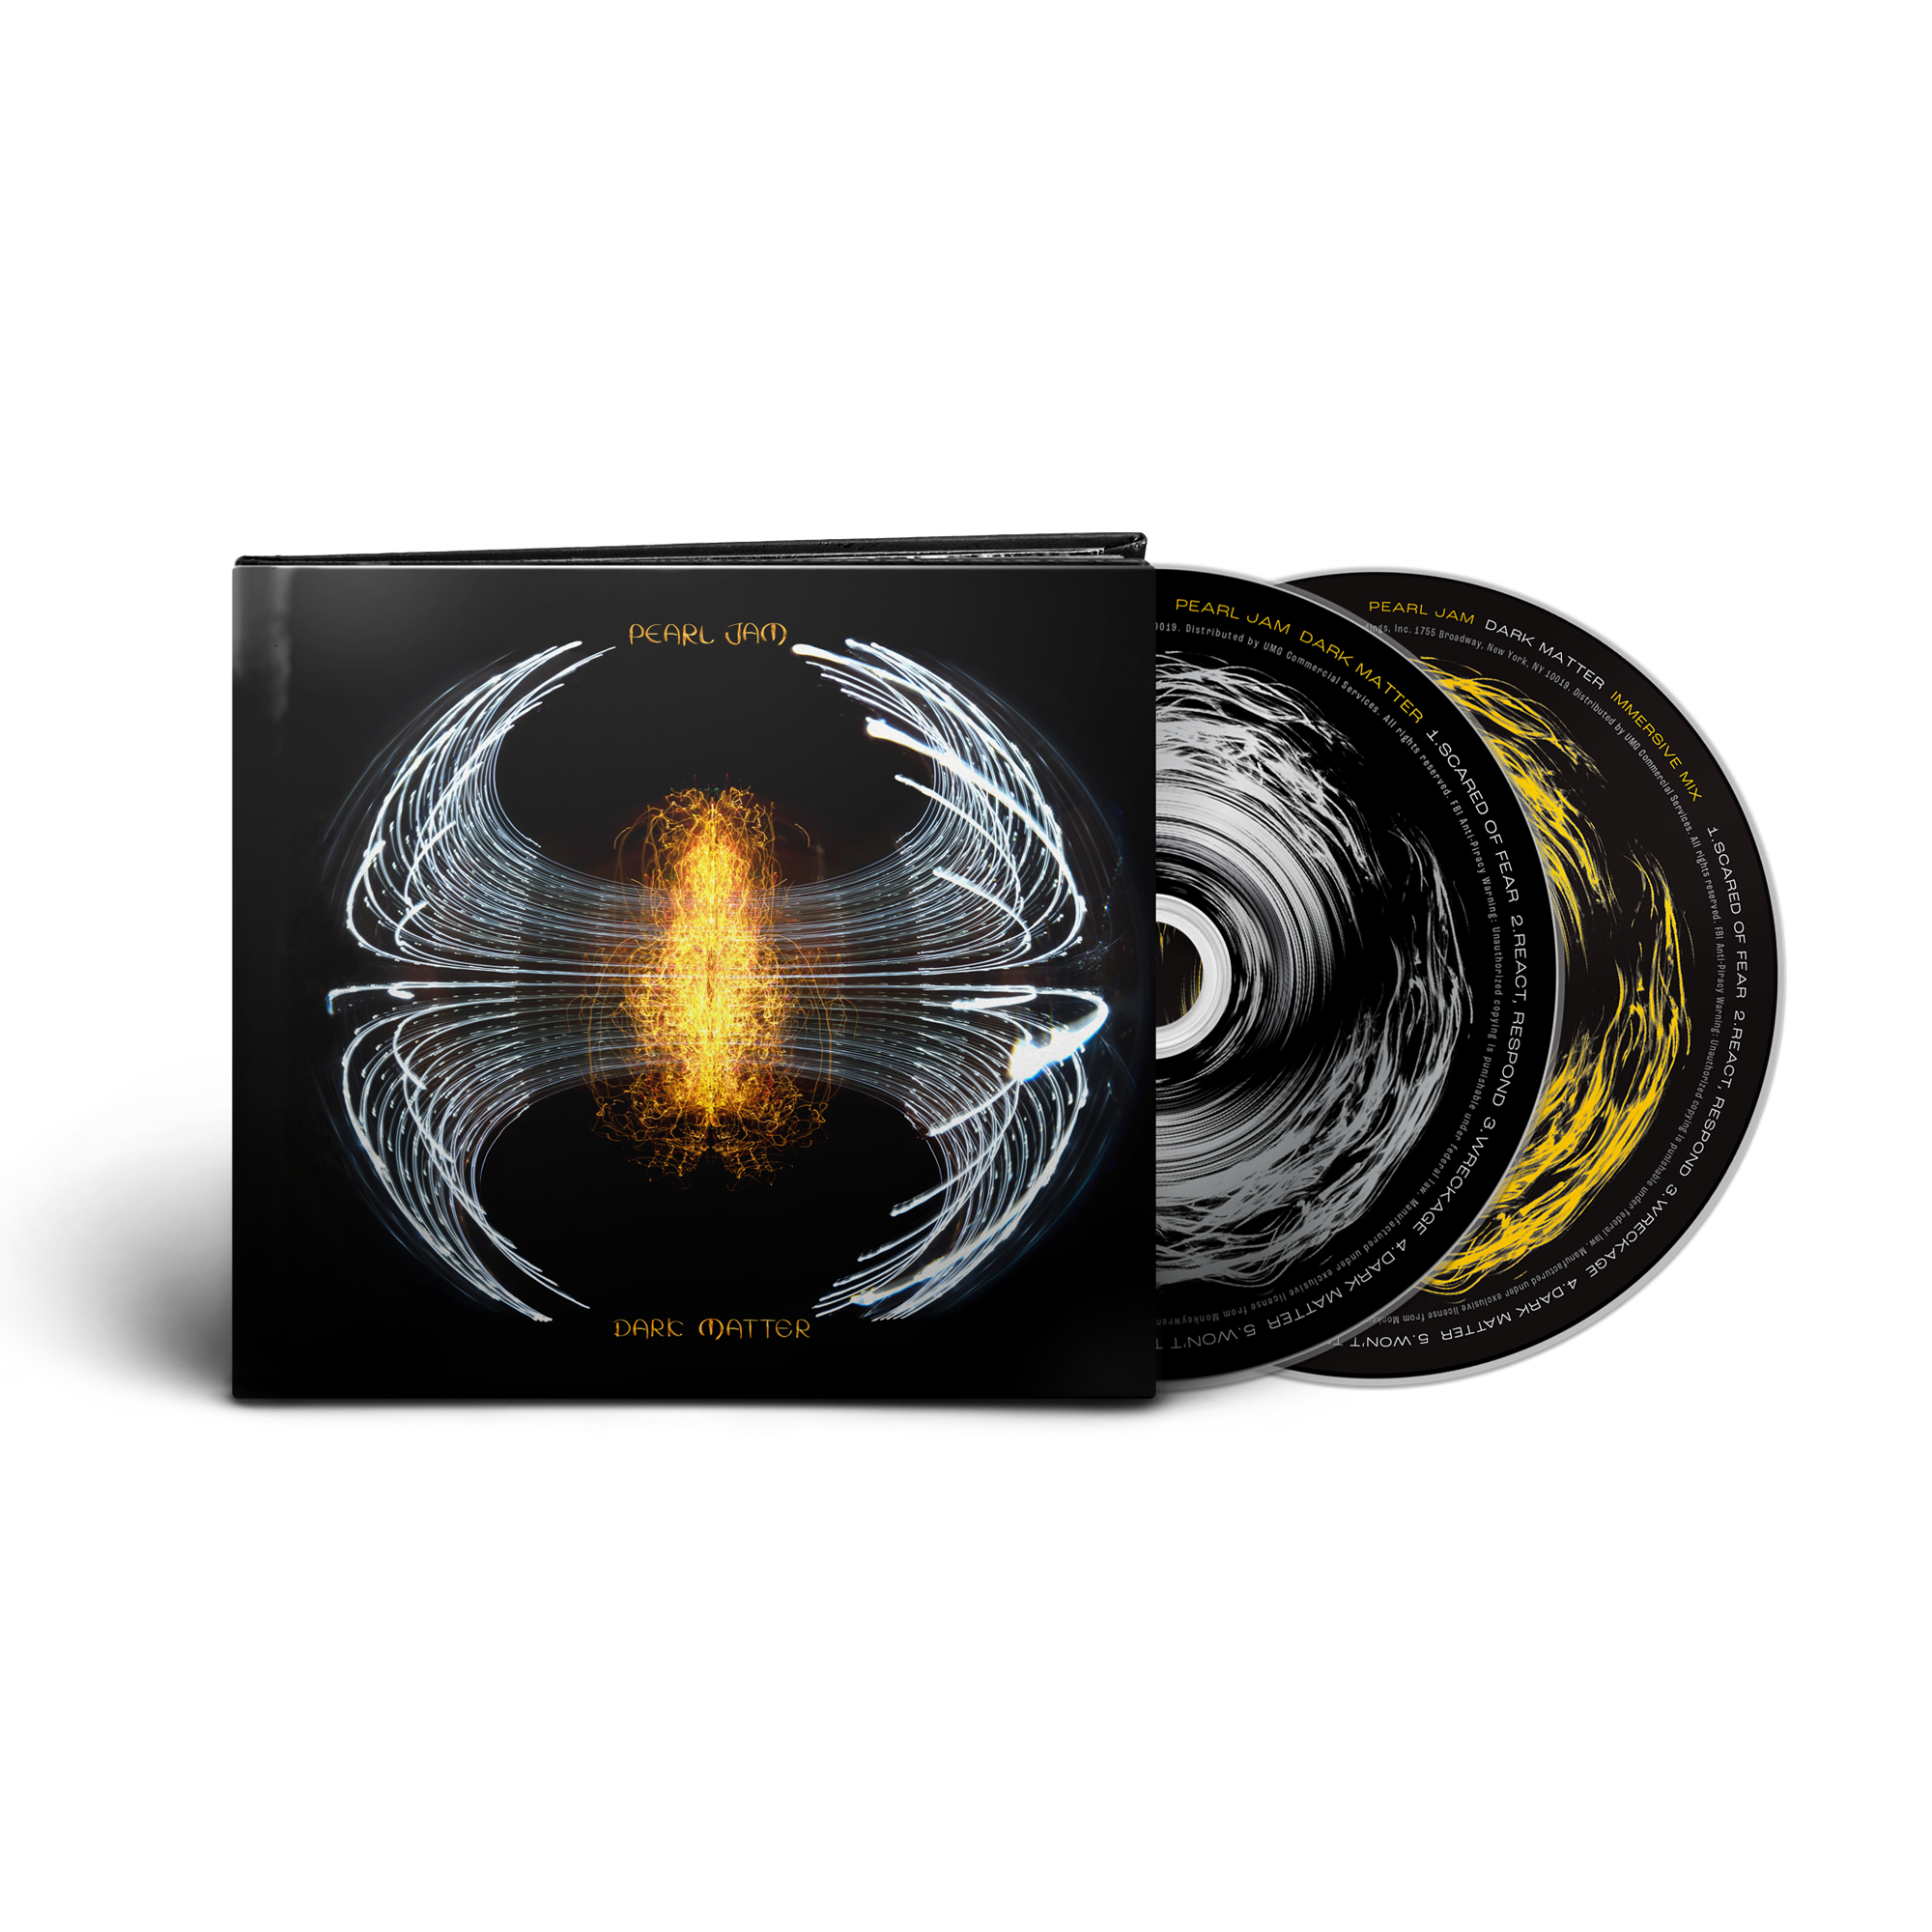 Dark Matter 7" Vinyl Single + Dark Matter Deluxe CD